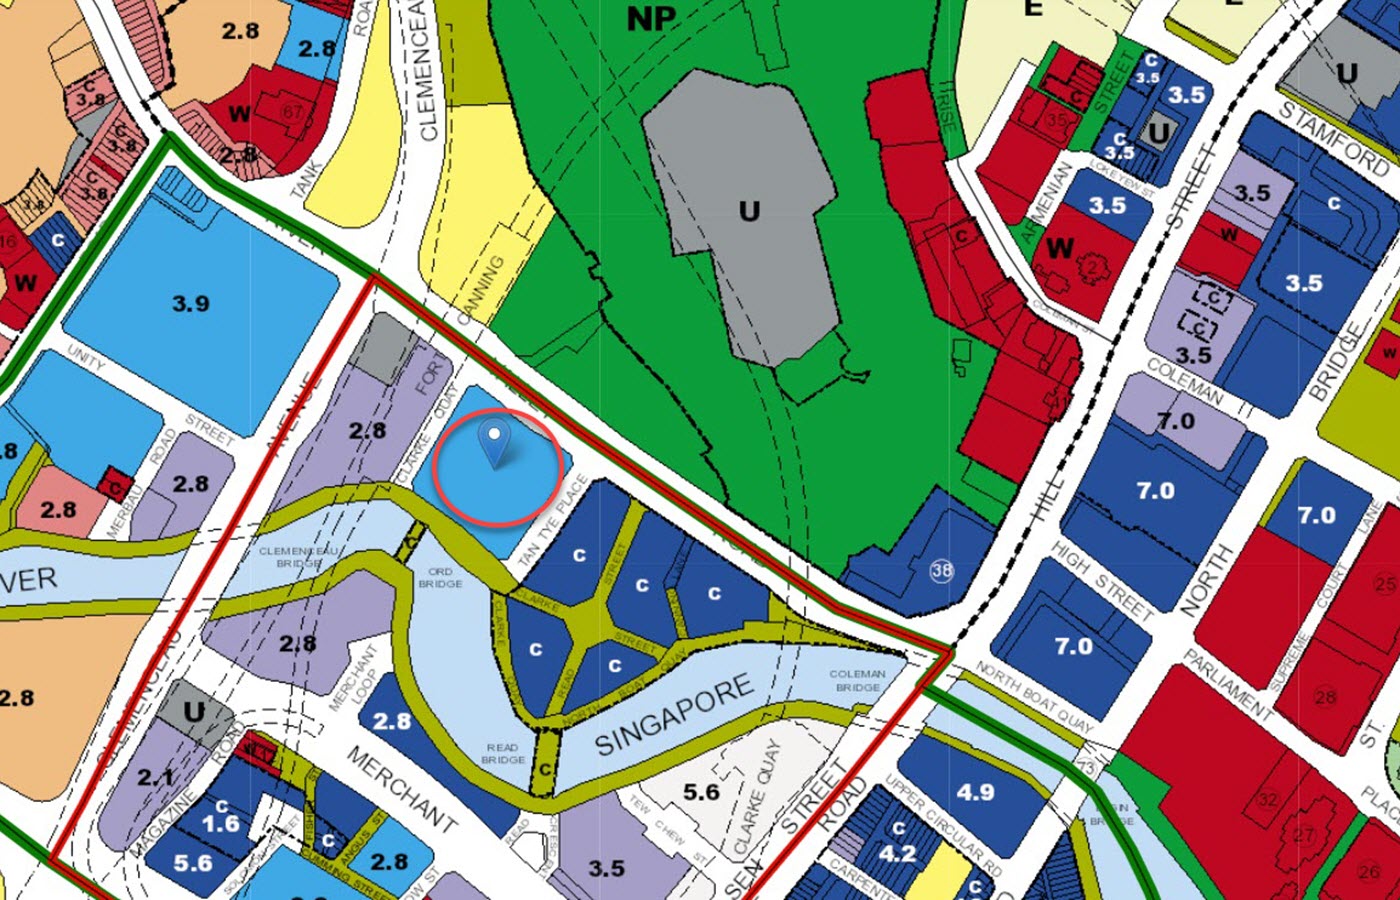 Canninghill Piers Condo Location - URA Master Plan Map